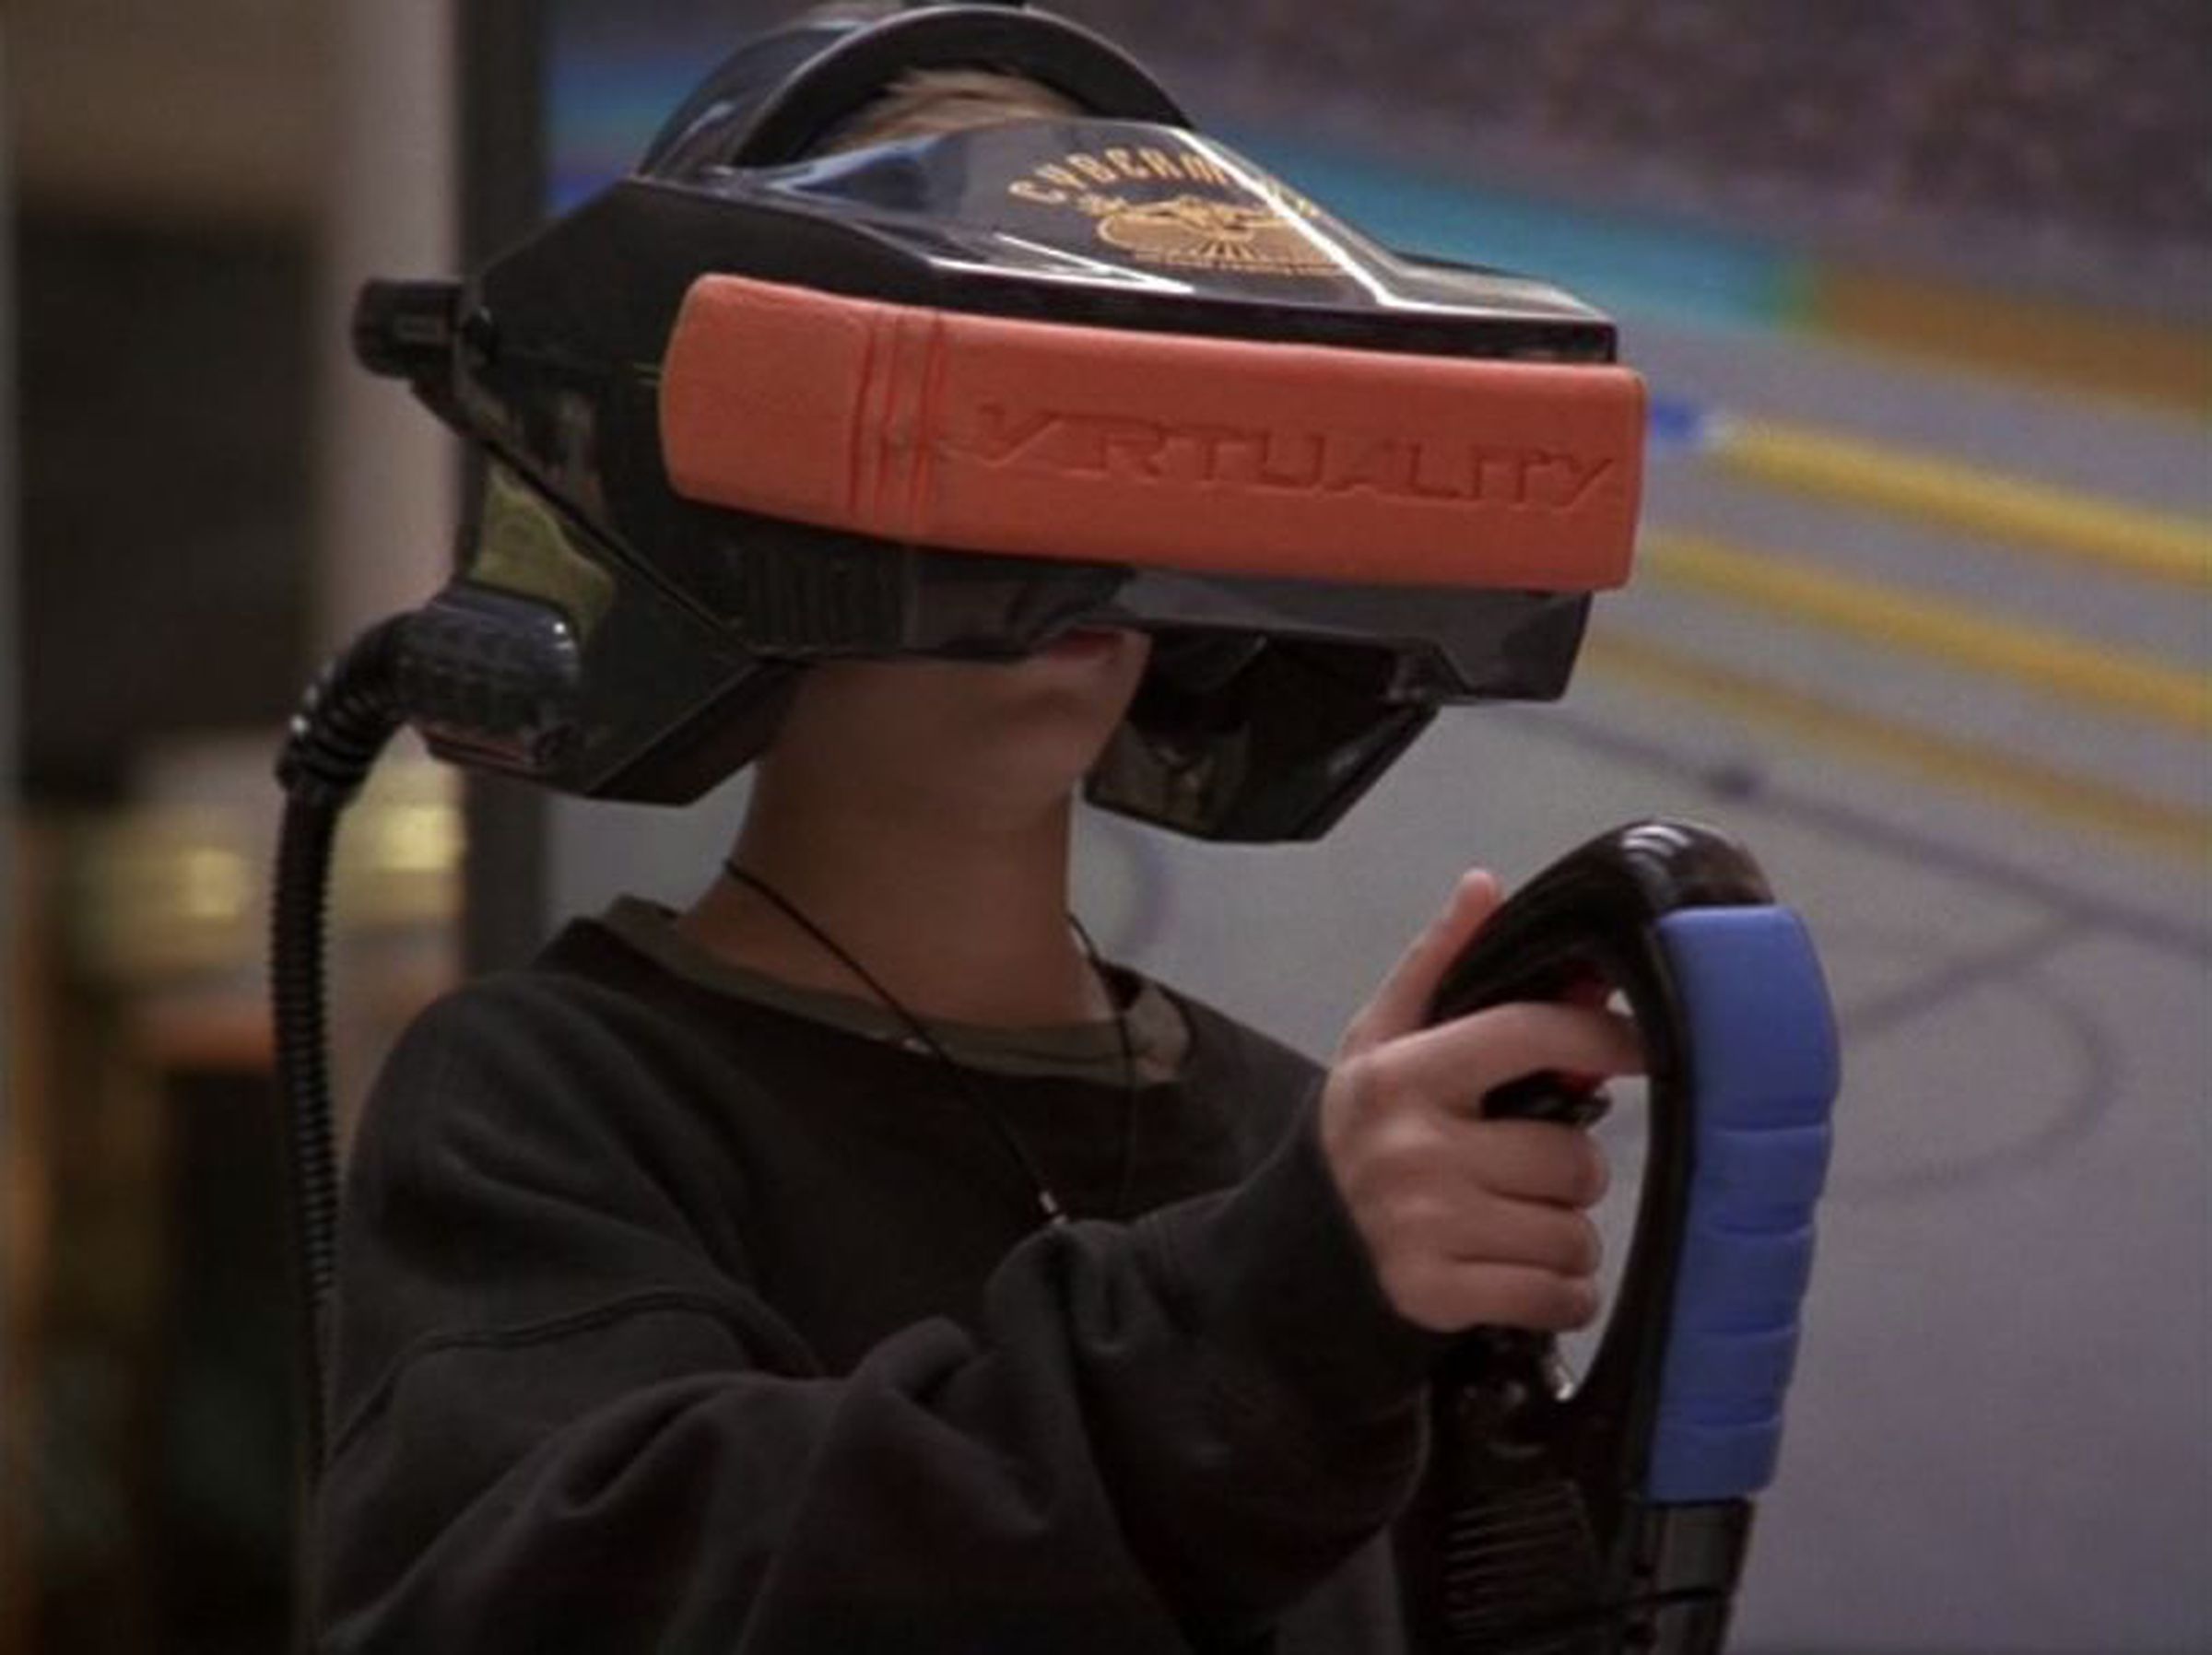 VR first kid